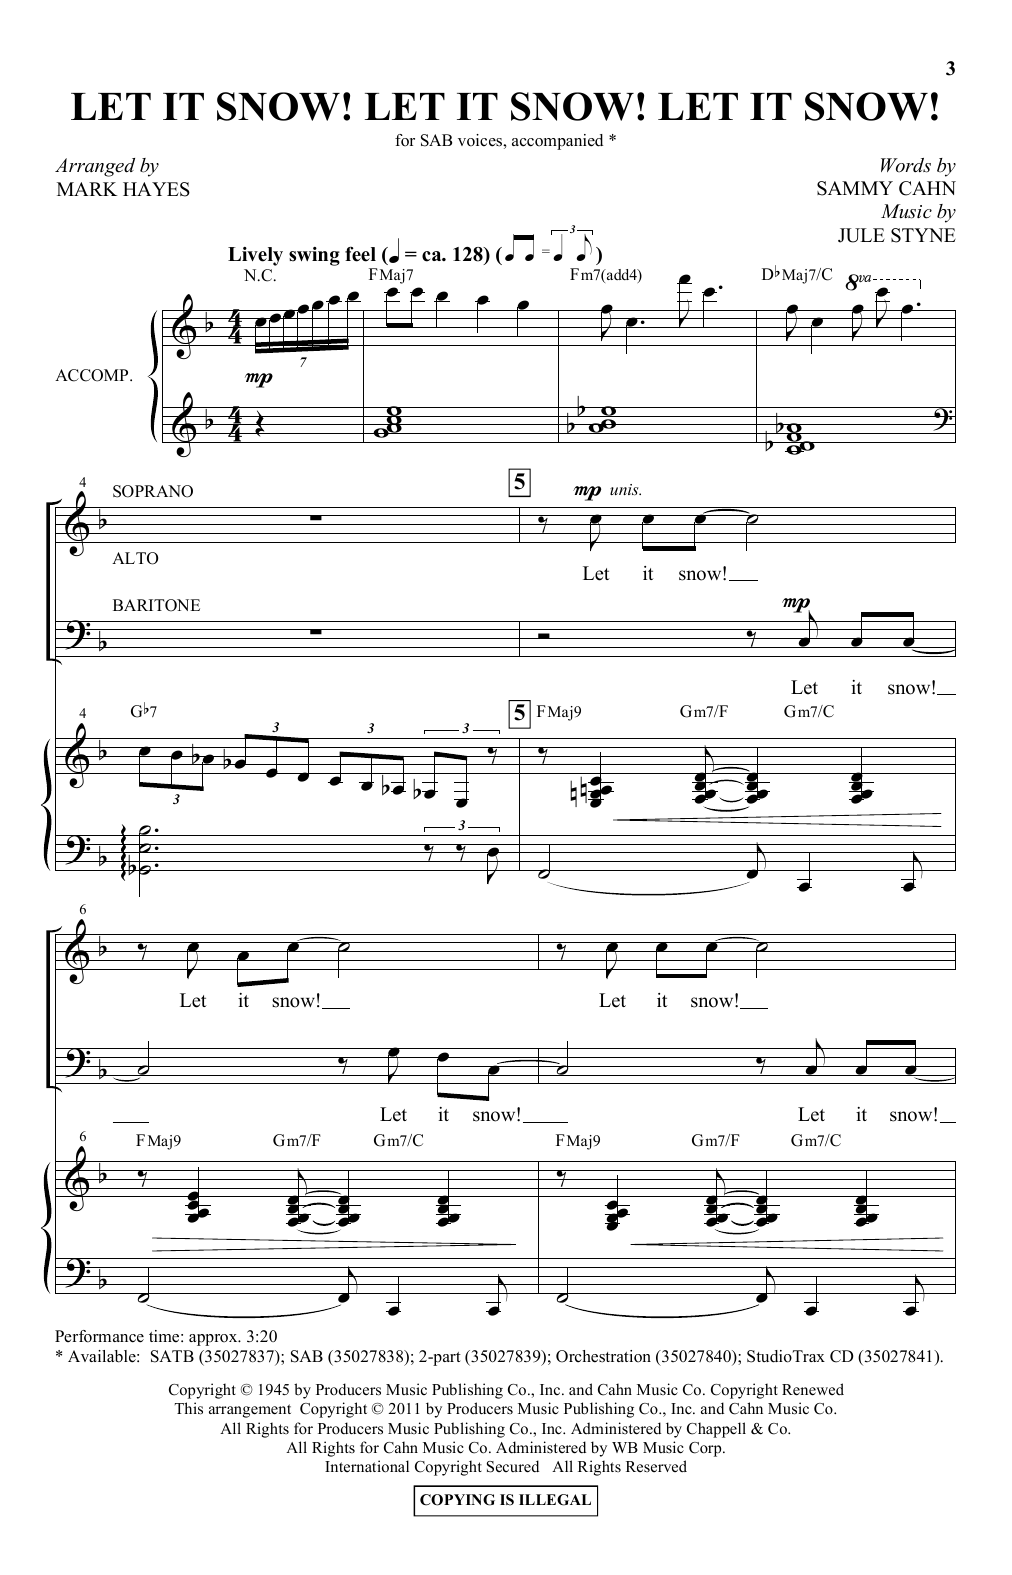 Download Sammy Cahn & Julie Styne Let It Snow! Let It Snow! Let It Snow! Sheet Music and learn how to play 2-Part Choir PDF digital score in minutes